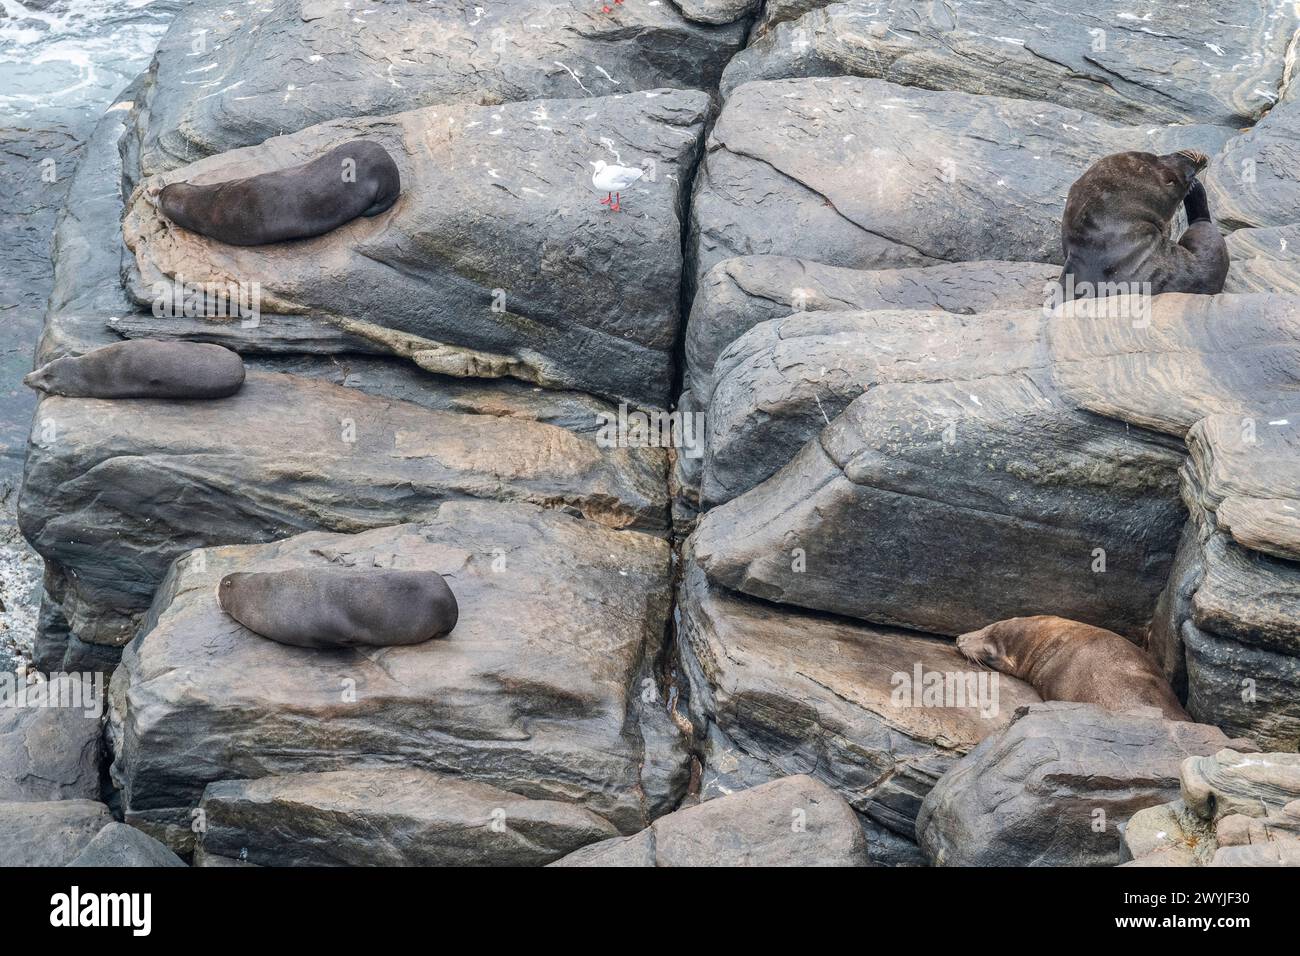 New Zealand fur seal or Australasian fur seal (Arctocephalus forsteri), wild in Australia, colony in coastal rocks. Stock Photo